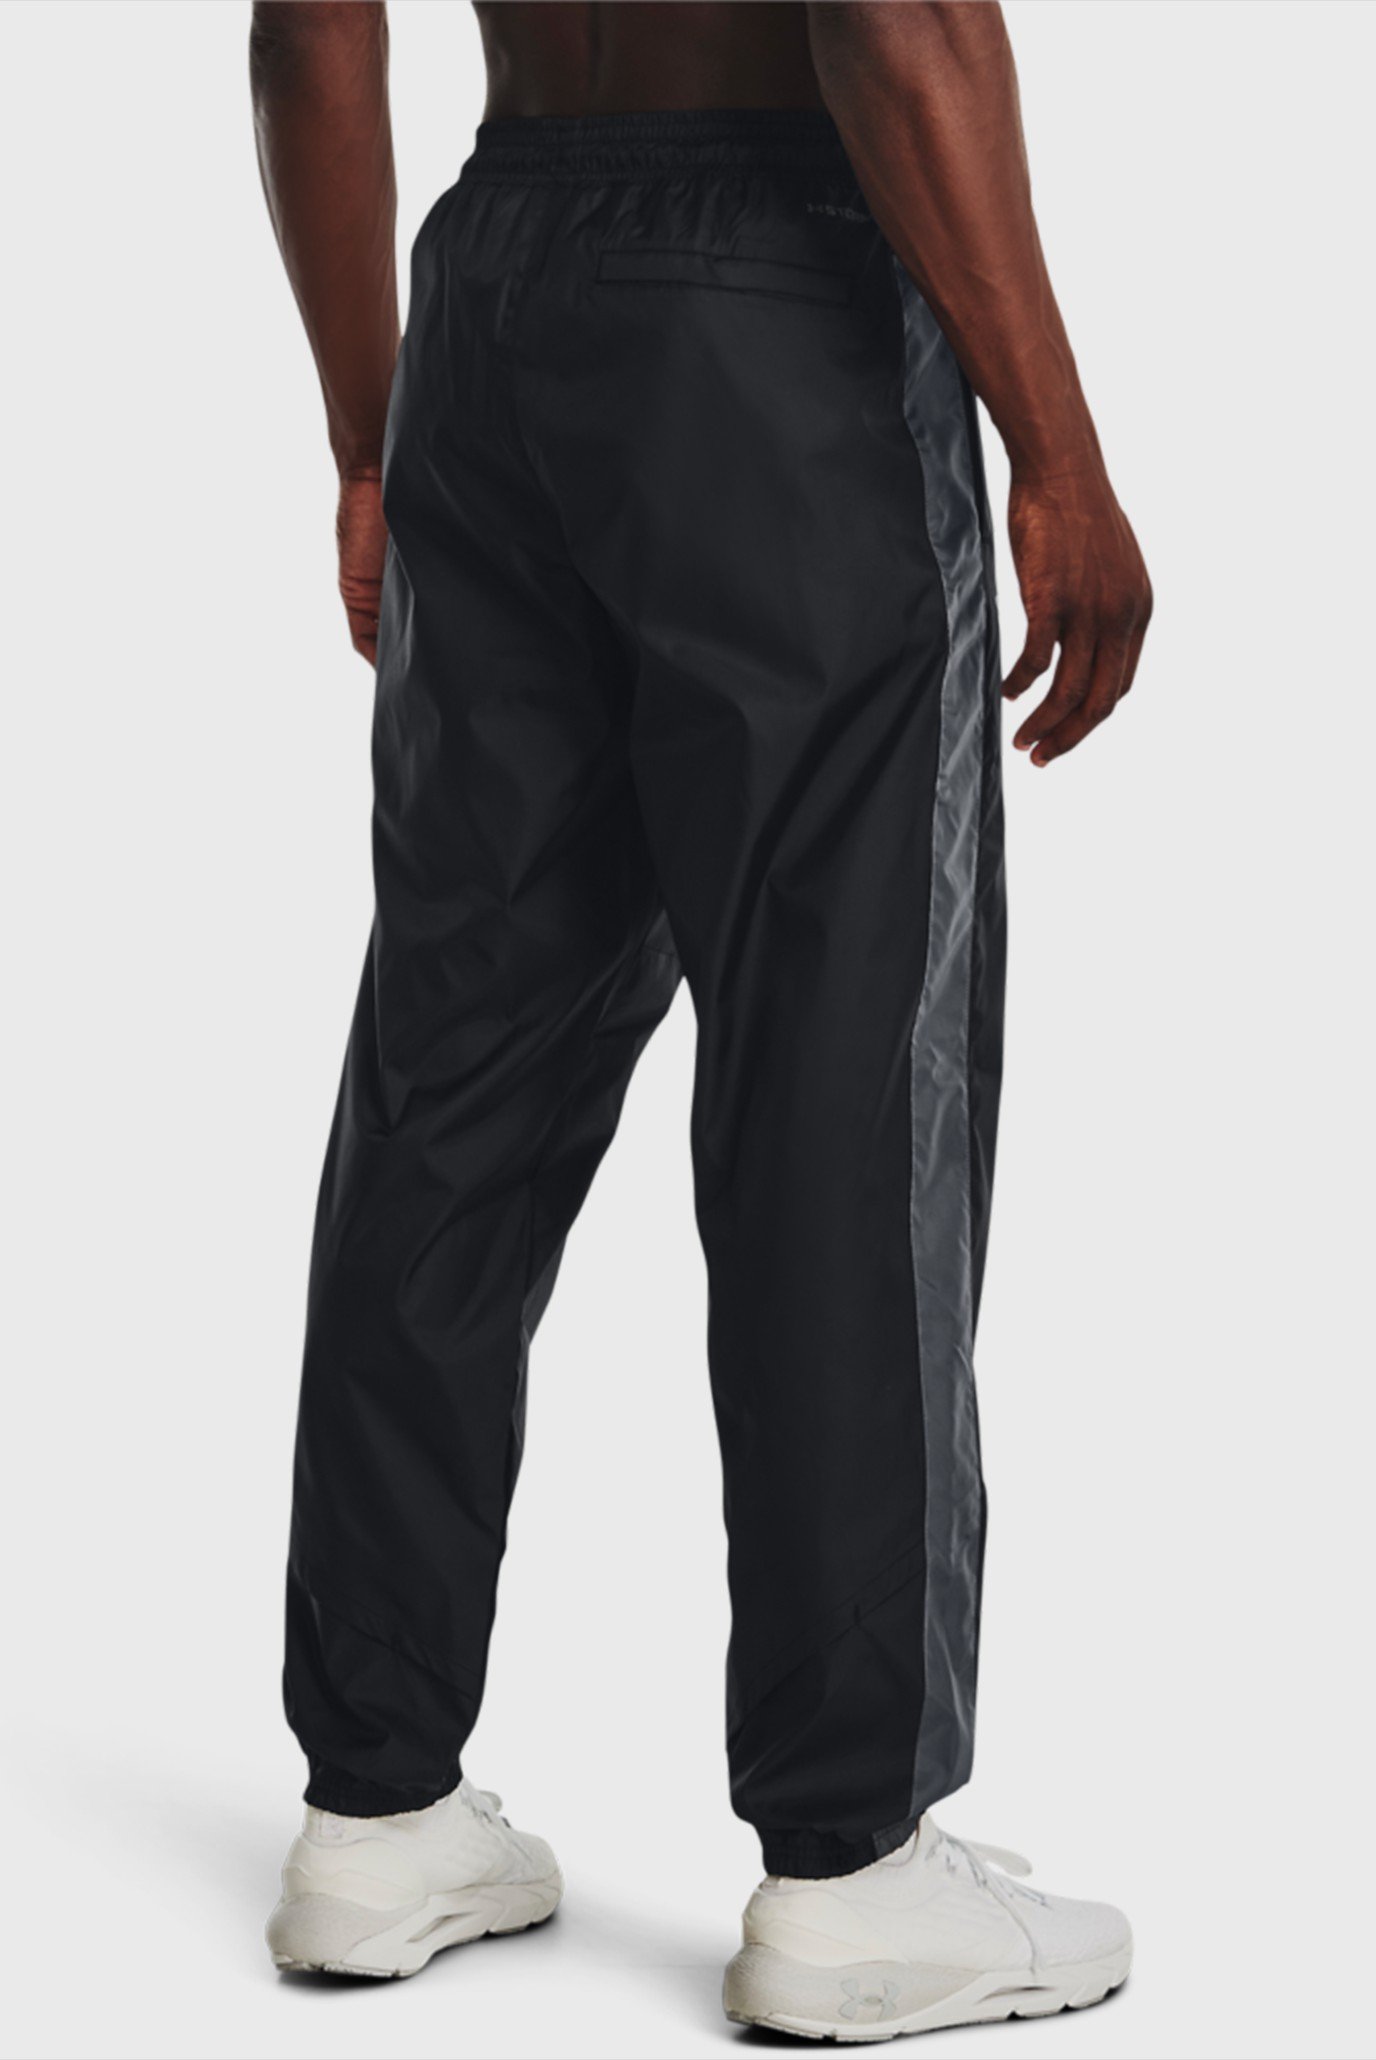 Under Armour Men's UA Legacy Woven Pants 1373824 Clay/White Size M